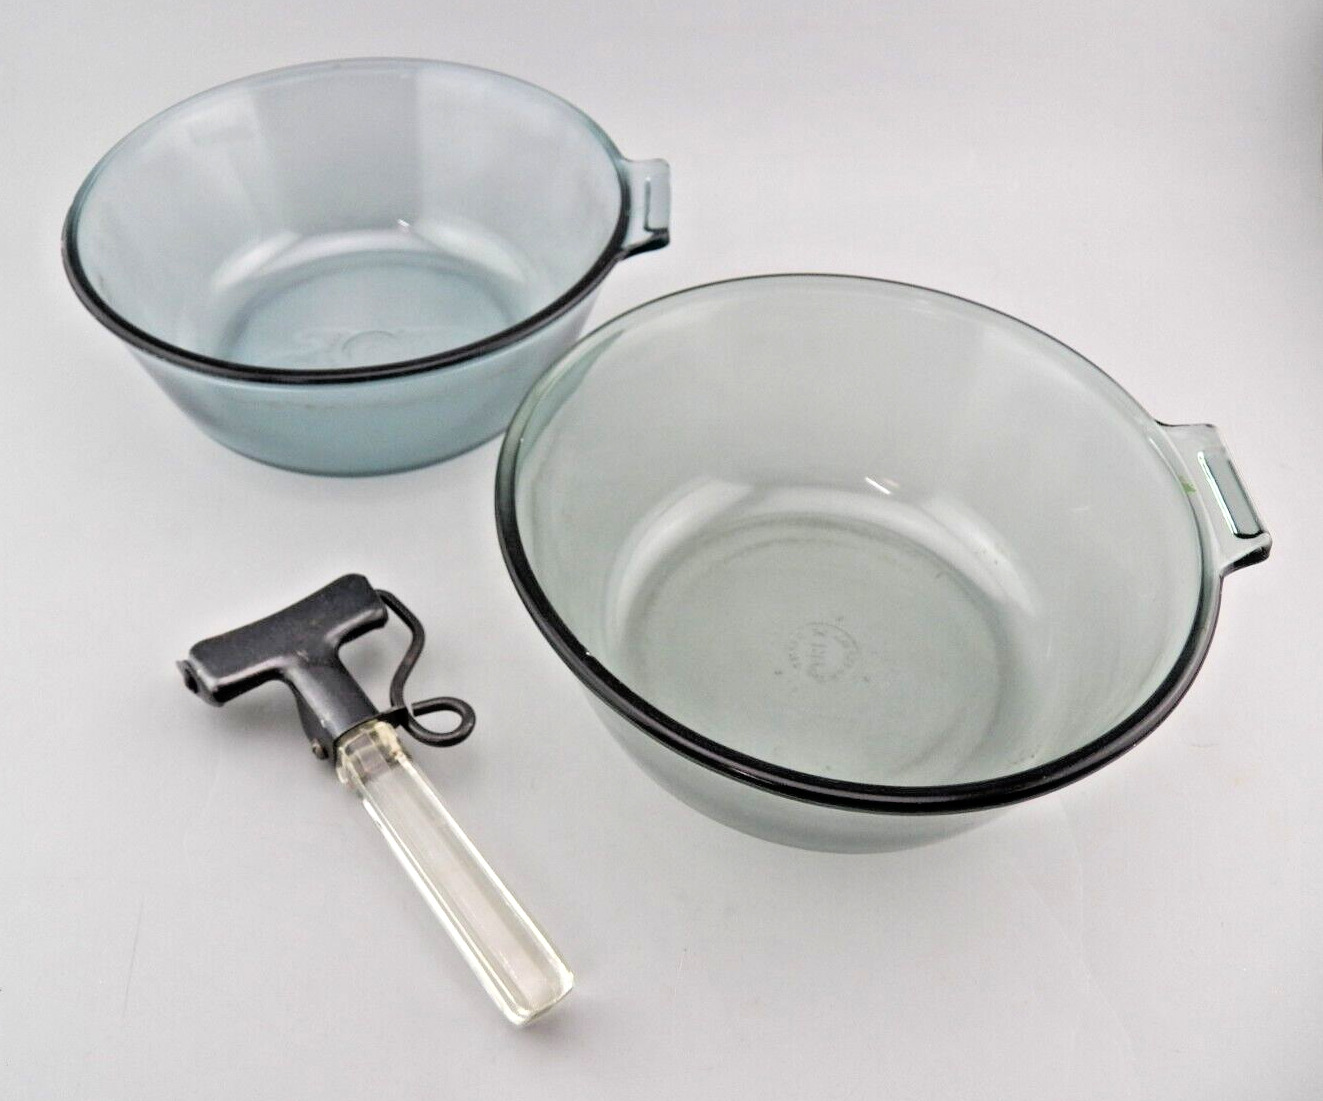 VTG Pyrex Flameware Glass Cookware Pans with Glass Handle 3 Piece Set Pair #833B